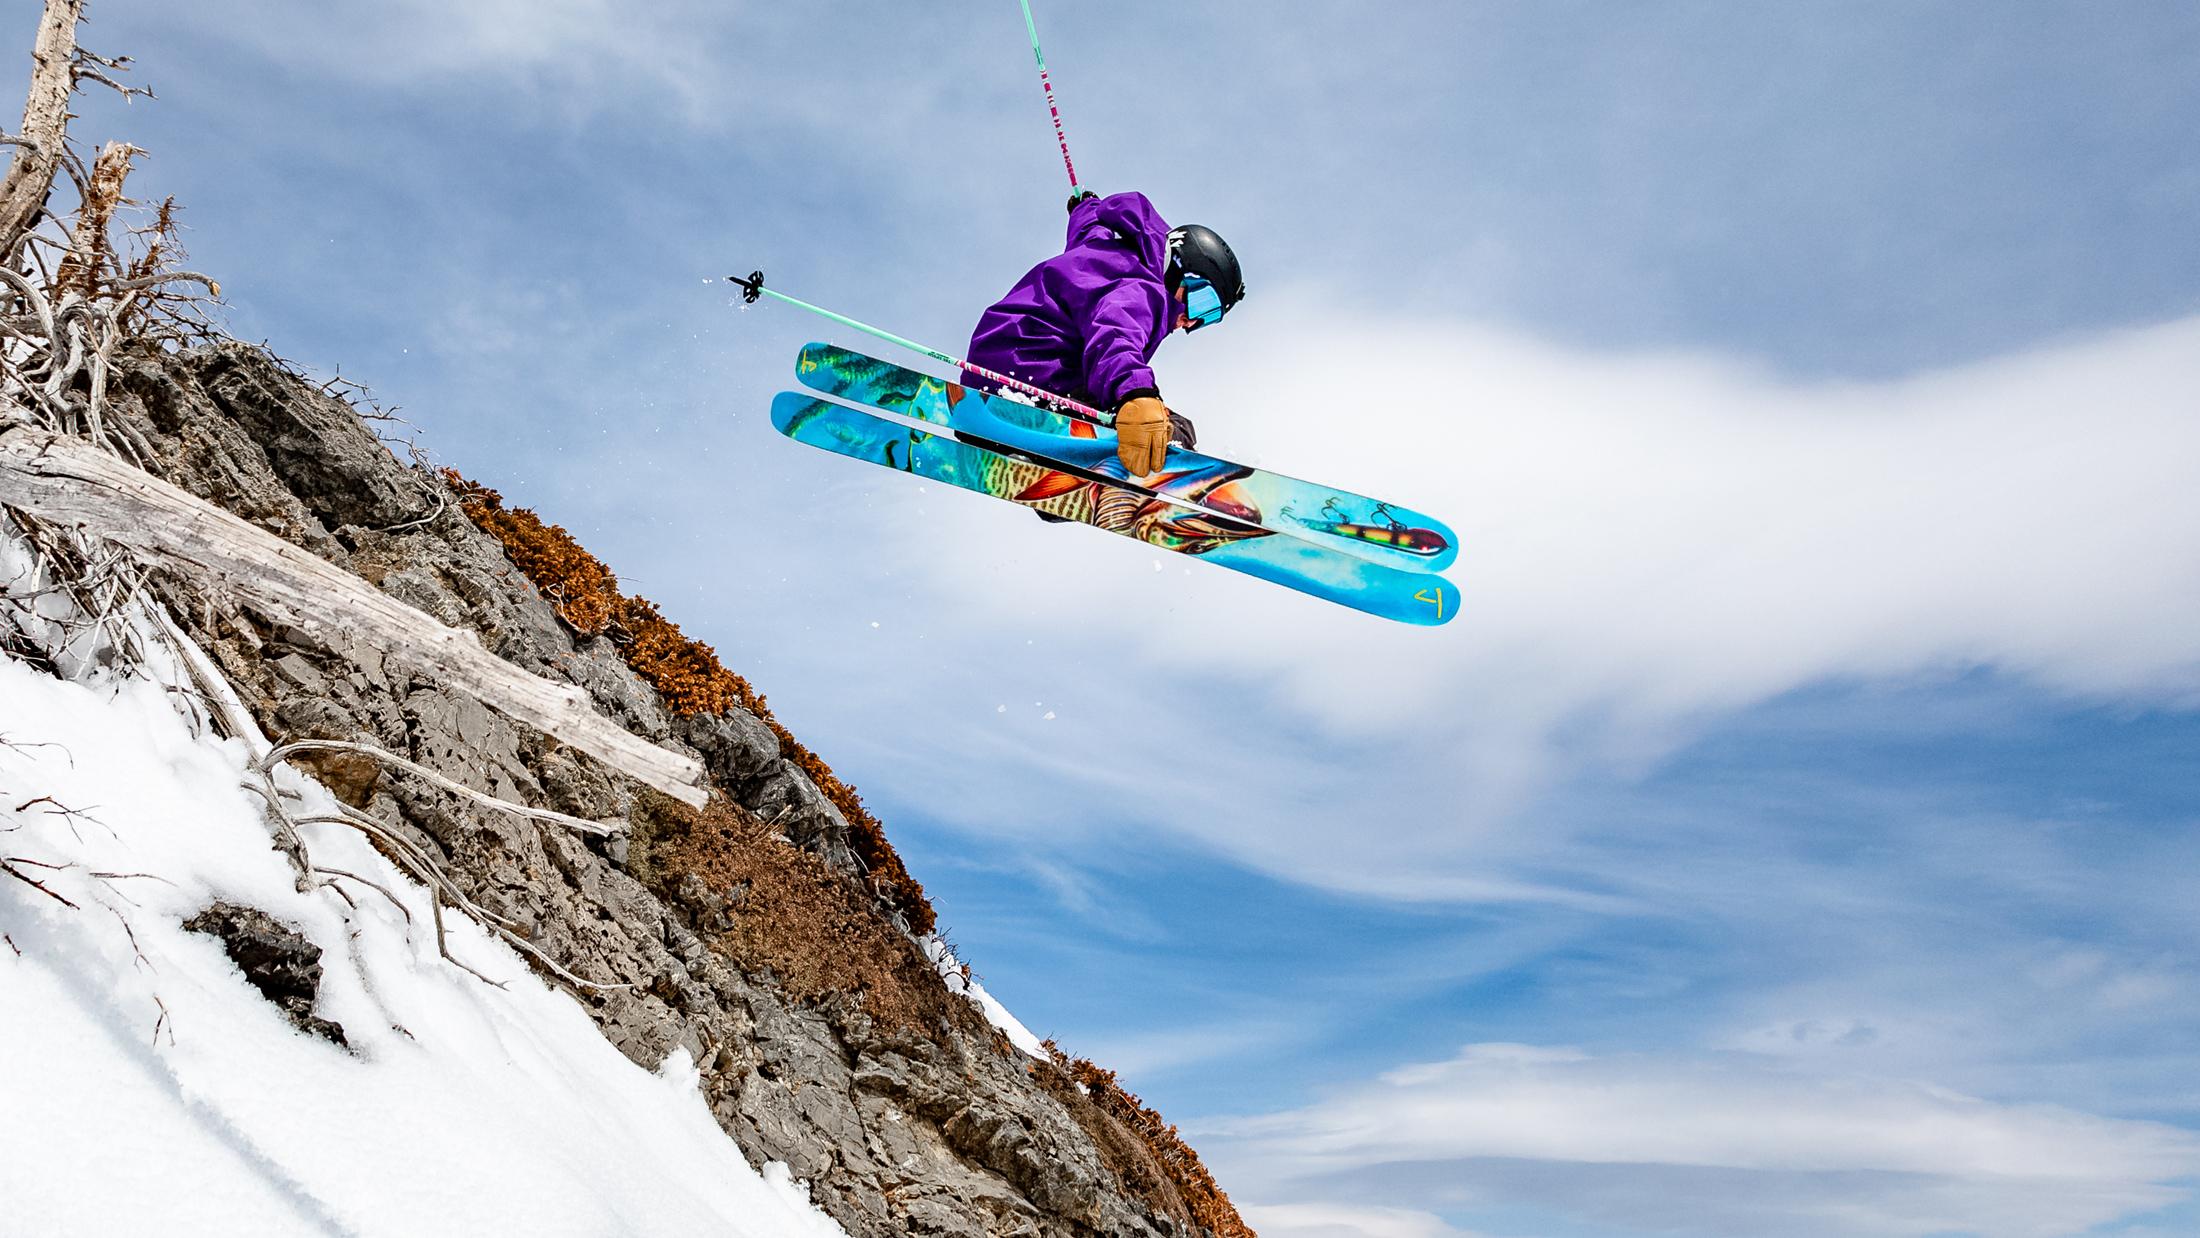 The Slacker "ESOX" Jon Q. Wright x J Collab Limited Edition Ski Shredding Image